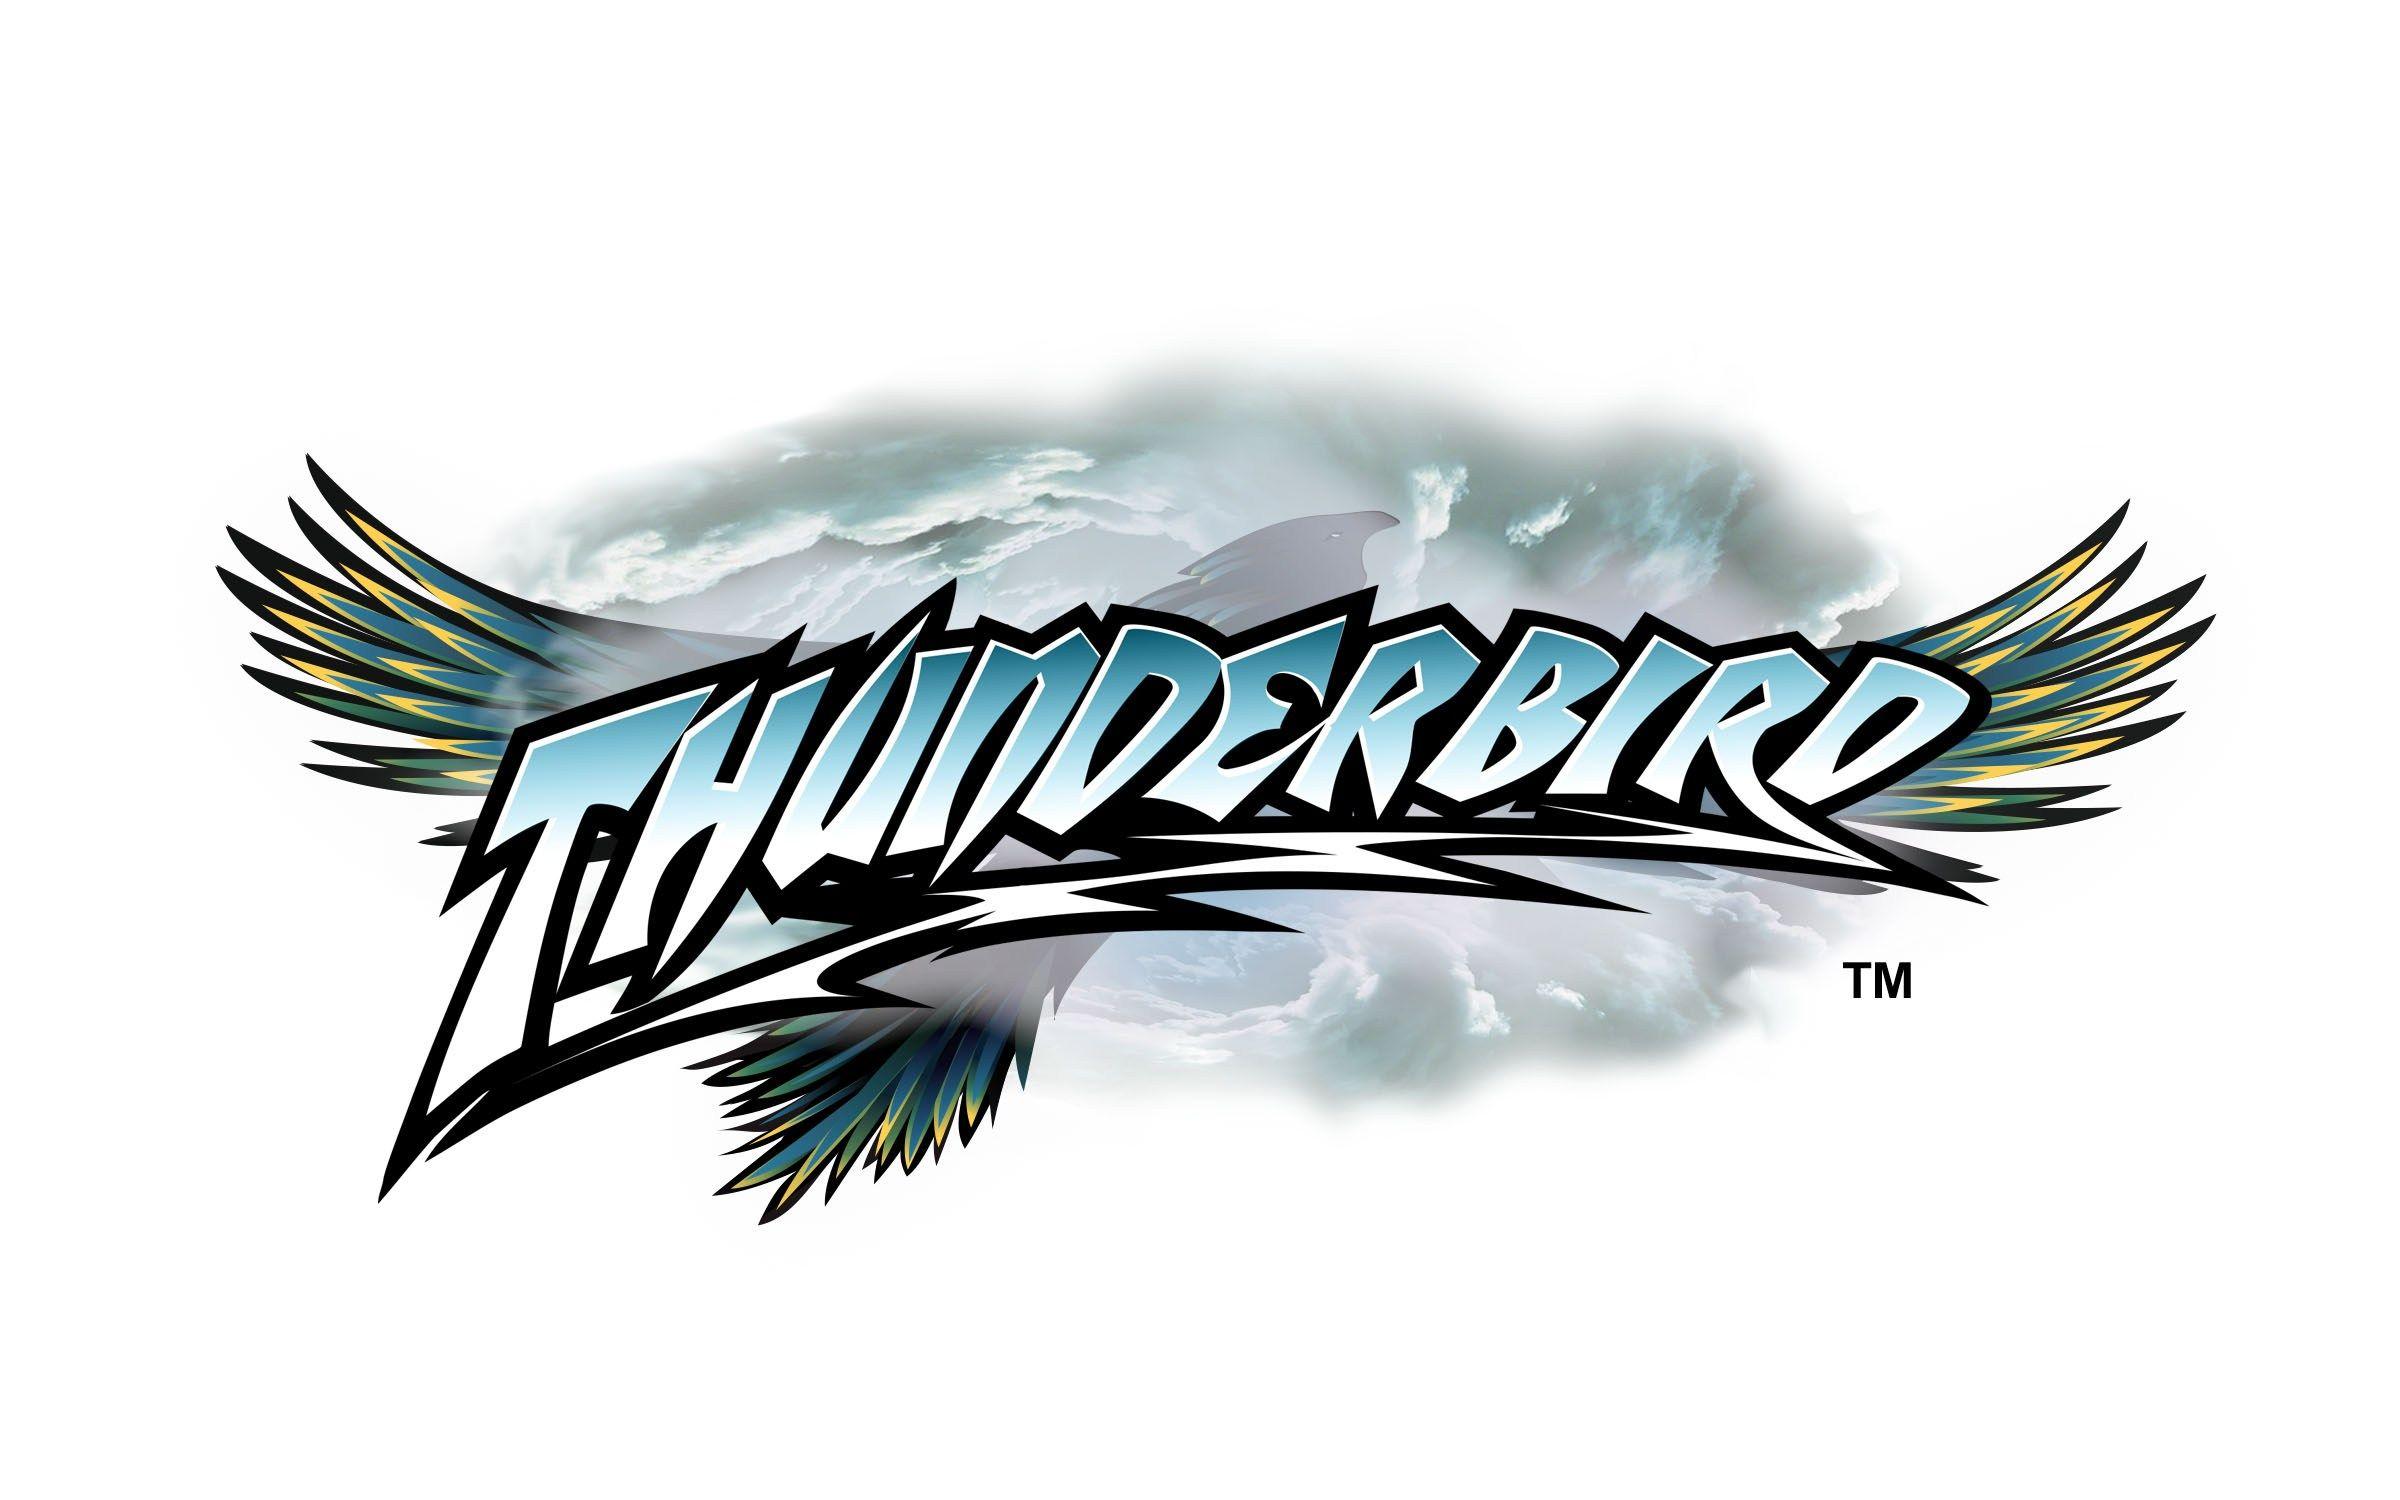 Thunderbird Logo - Thunderbird launches next year at Holiday World | WSLM RADIO